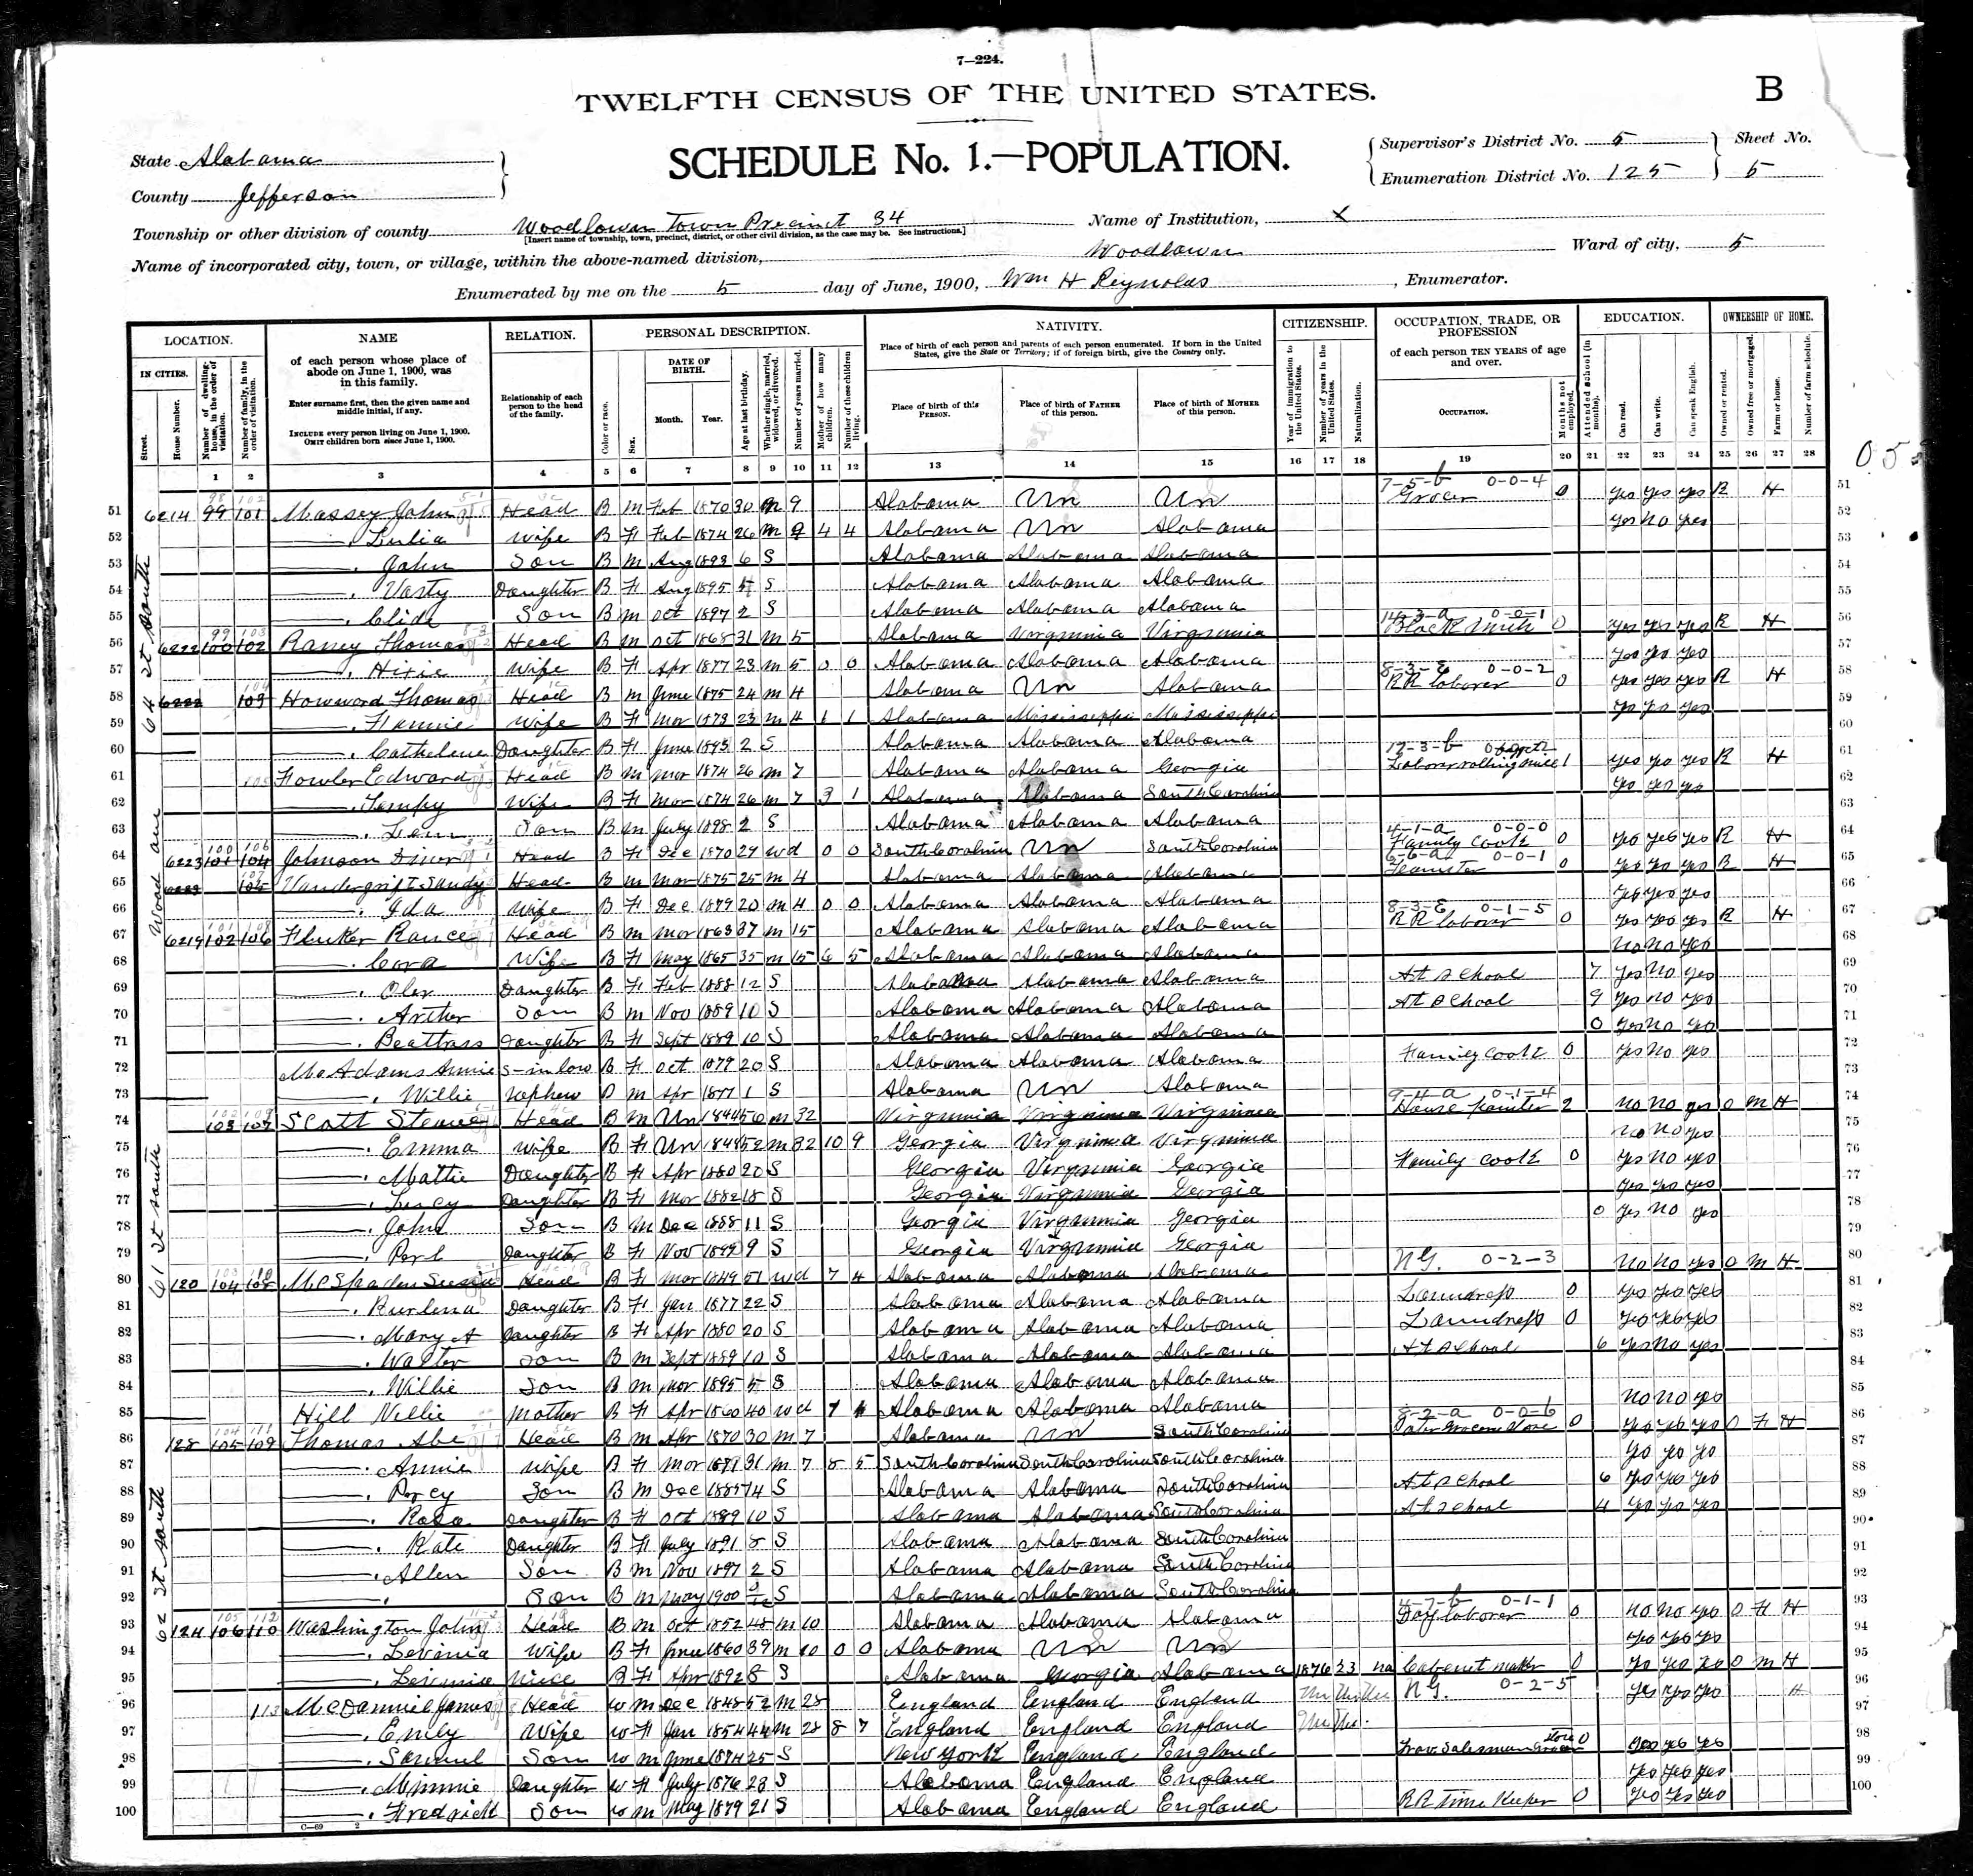 Fowler in 1900 Census